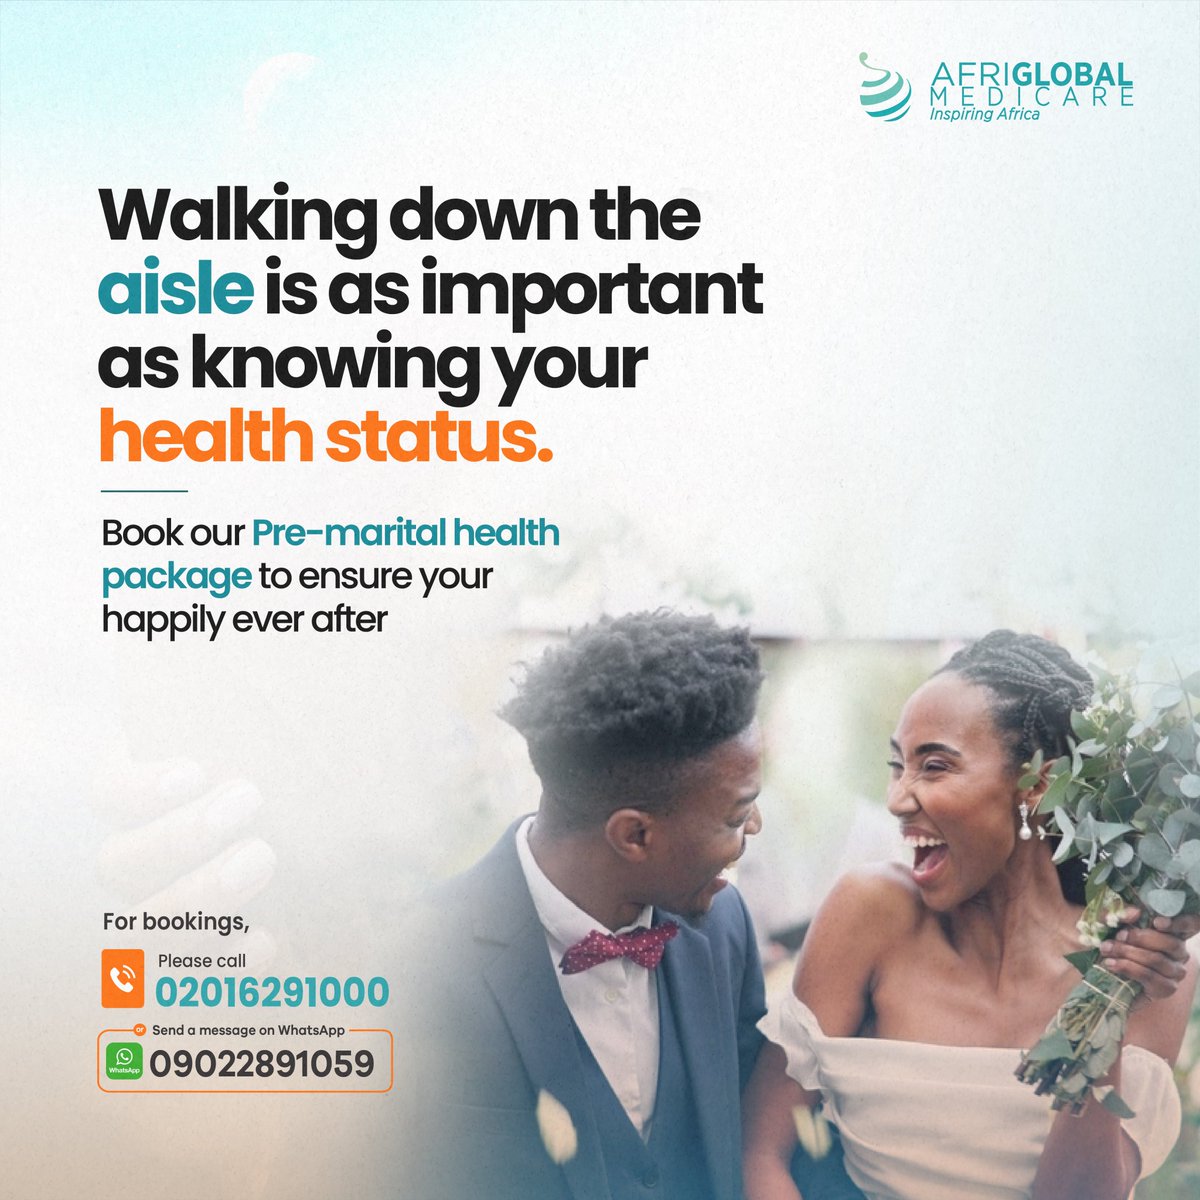 To book your pre-marital screening, call 02016291000, 02016290998, or walk into any of our test centres.

#AfriglobalMedicare #PreMaritalScreening #AML #DiagnosticCenterInNigeria